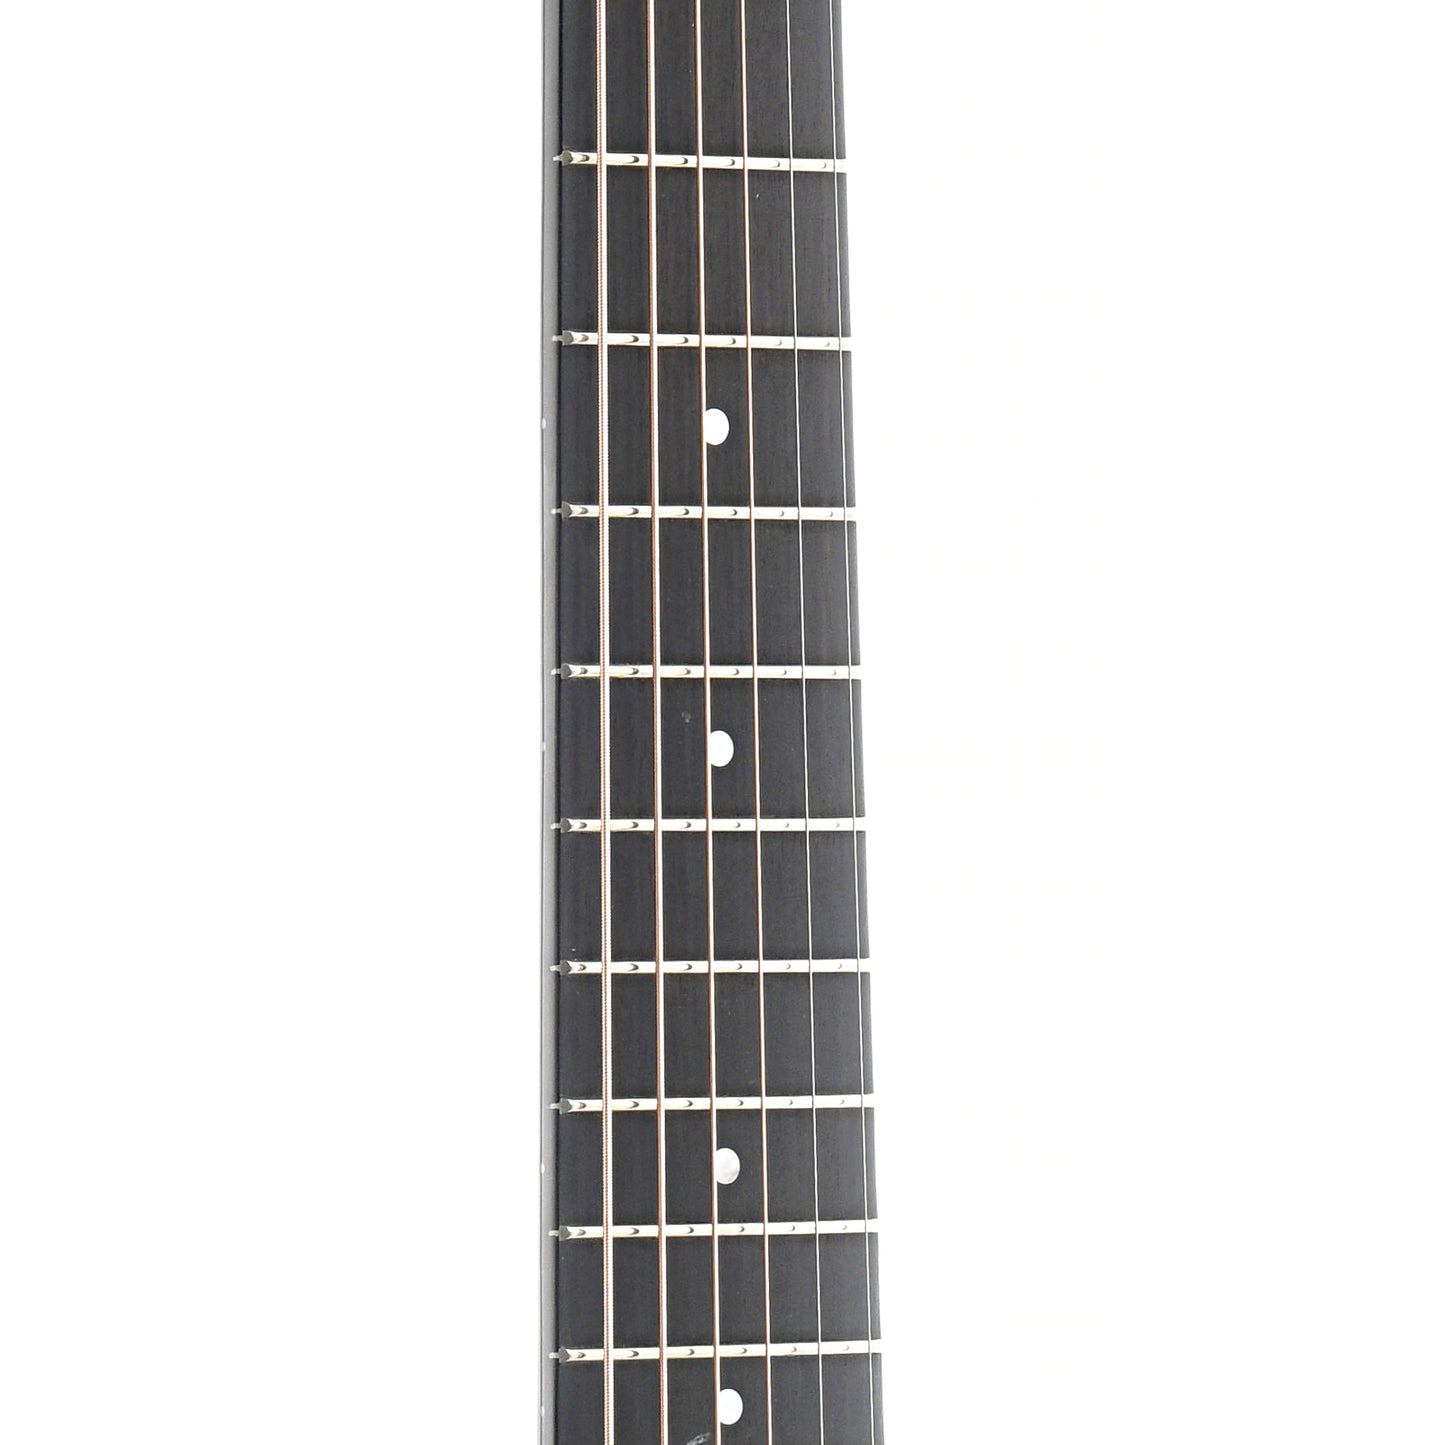 Image 6 of Romero Creations Daniel Ho 6-String Steel String Guitar - SKU# DHO6SSM : Product Type Flat-top Guitars : Elderly Instruments